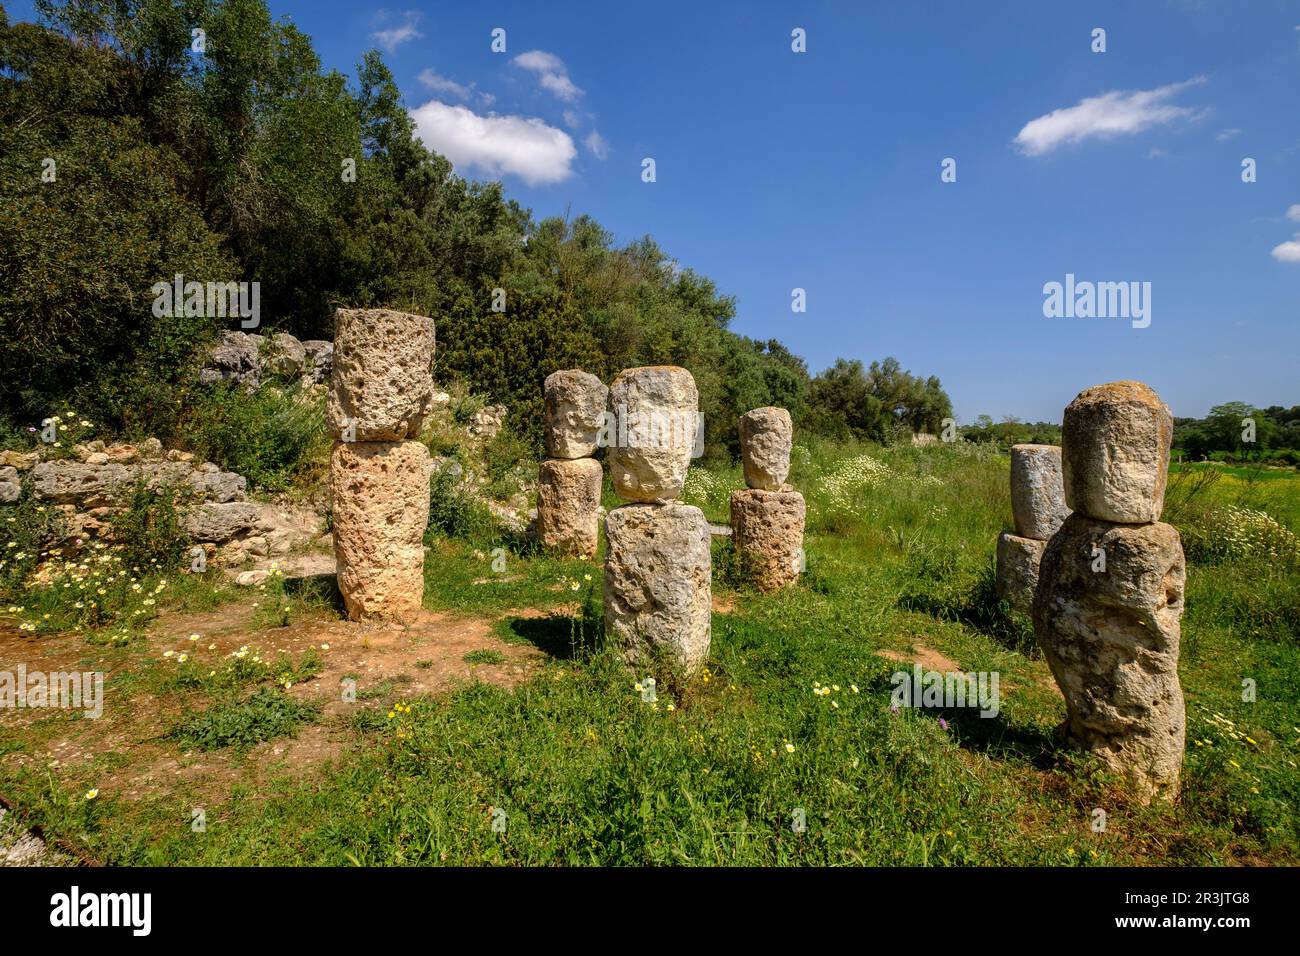 Son Corró , yacimiento arqueológico, datado en la época postalayótica (s.V-II A.c), SINEU, Isla de Mallorca, Iles Baléares, Espagne. Banque D'Images